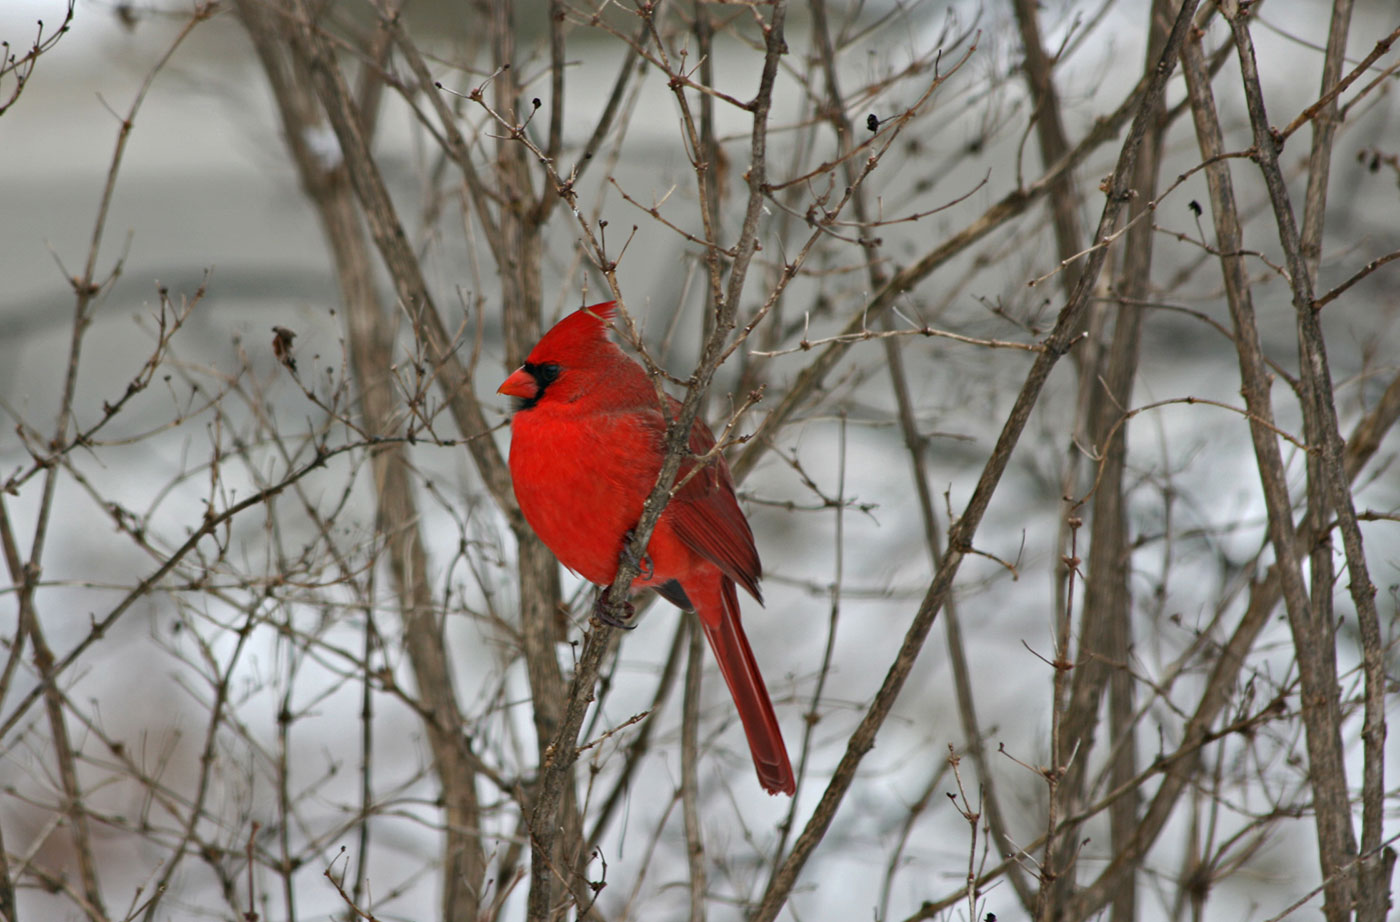 Northern Cardinal in tree